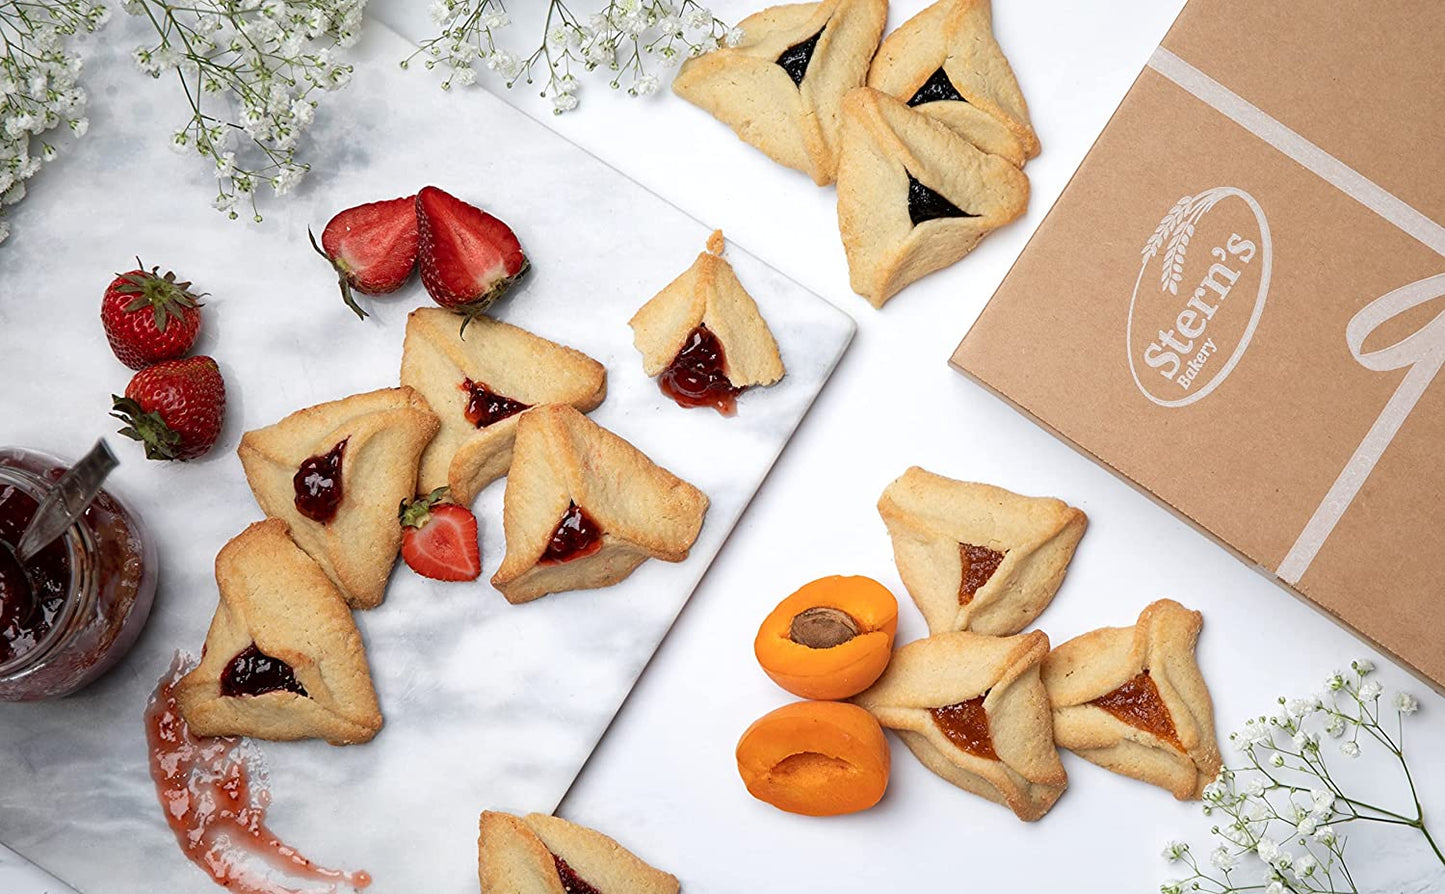 Stern's Bakery Hamentaschen Purim Gifts | Mishloach Manot | Shortbread Cookies with Apricot, Raspberry,Prune Filling |Shalach Manos Purim Basket | Kosher Gourmet Hamentashen Cookies